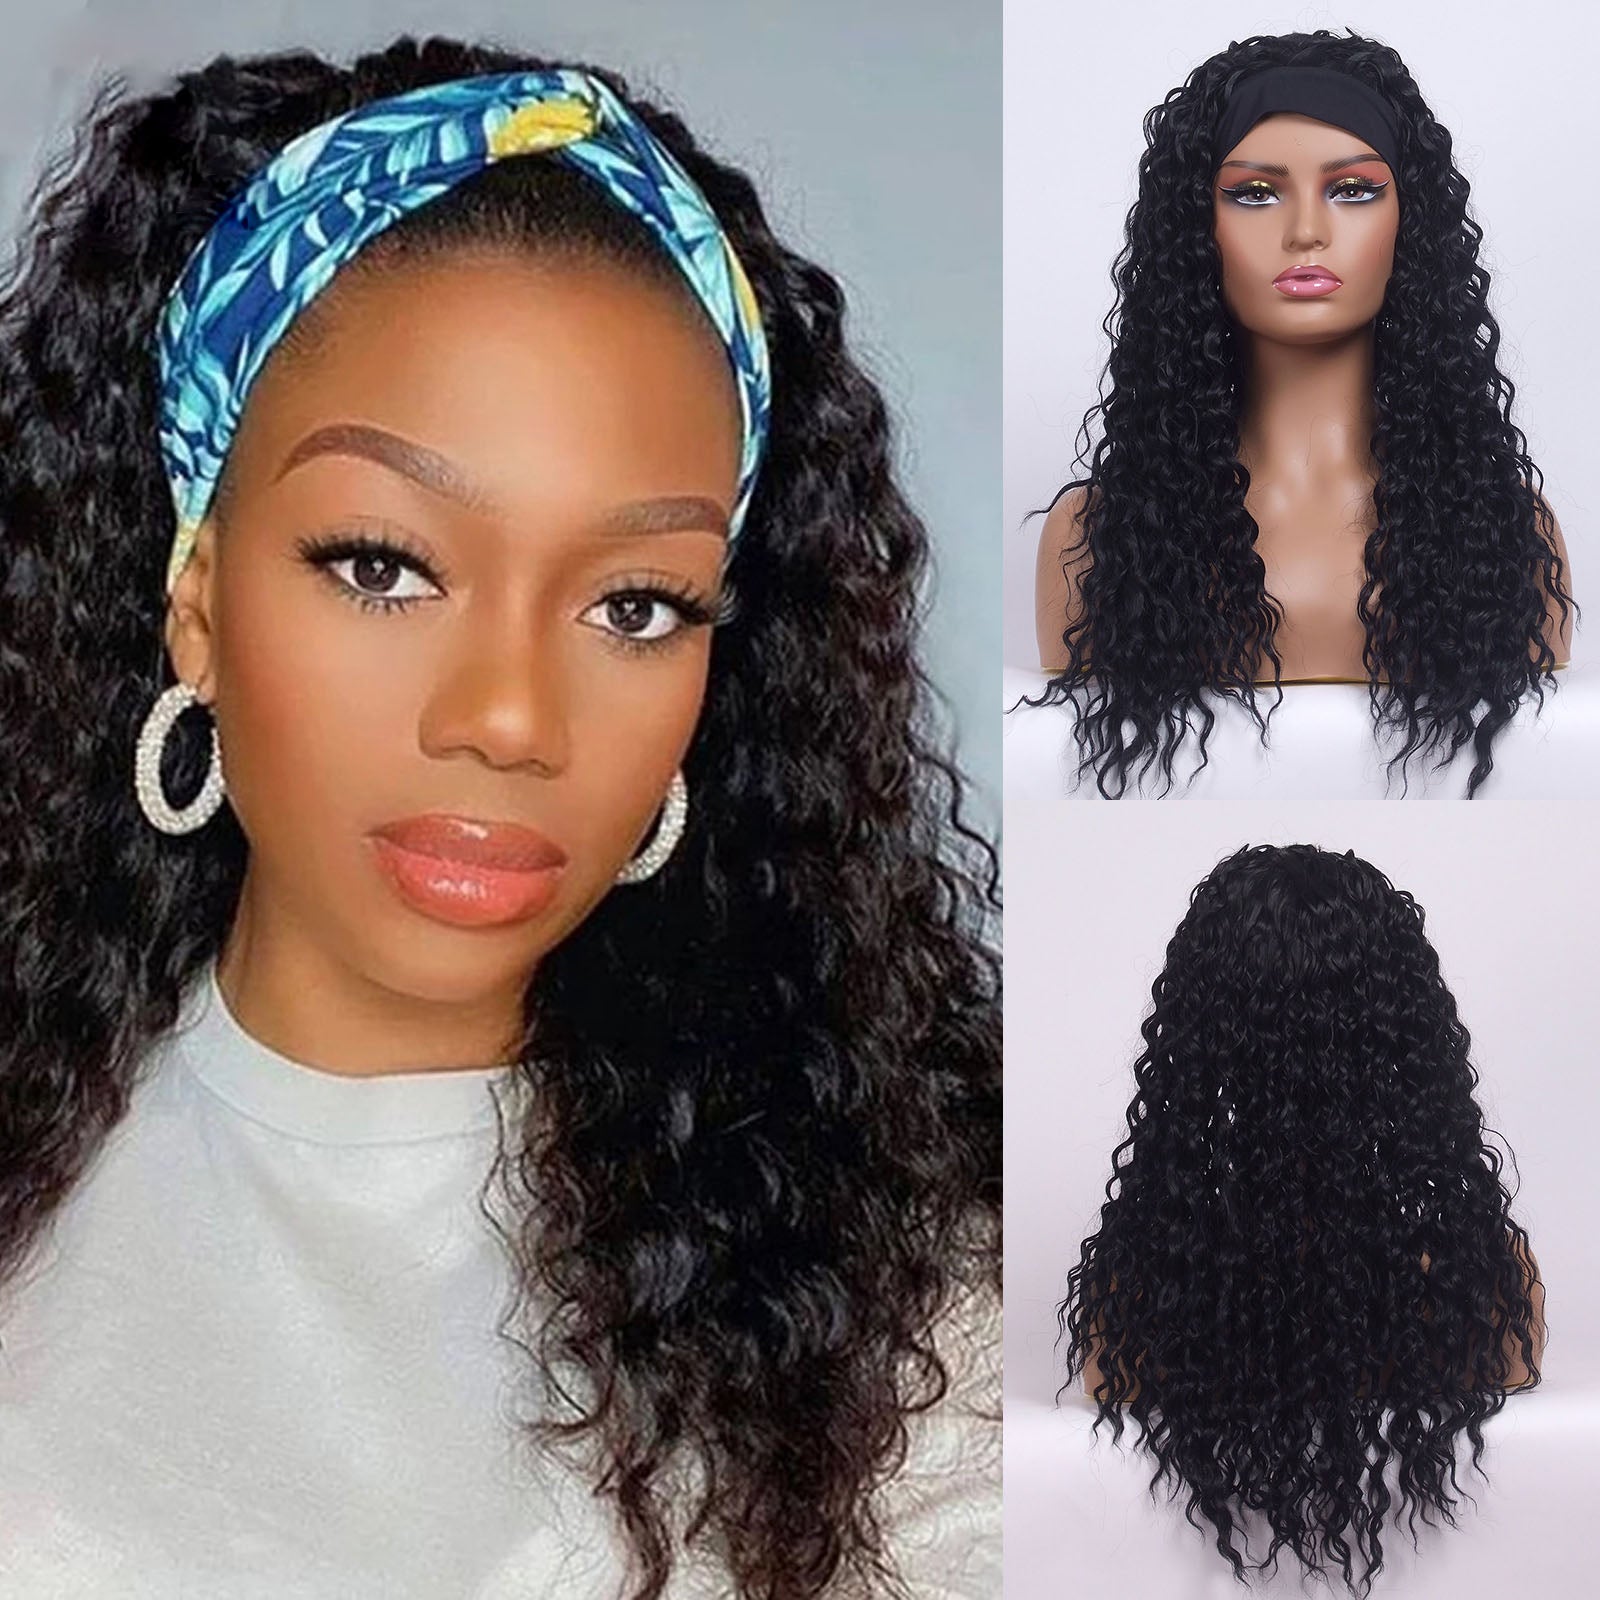 LINGDORA Long Kinky Curly Glueless Headband Wigs for Black Women Natural Looking High Density